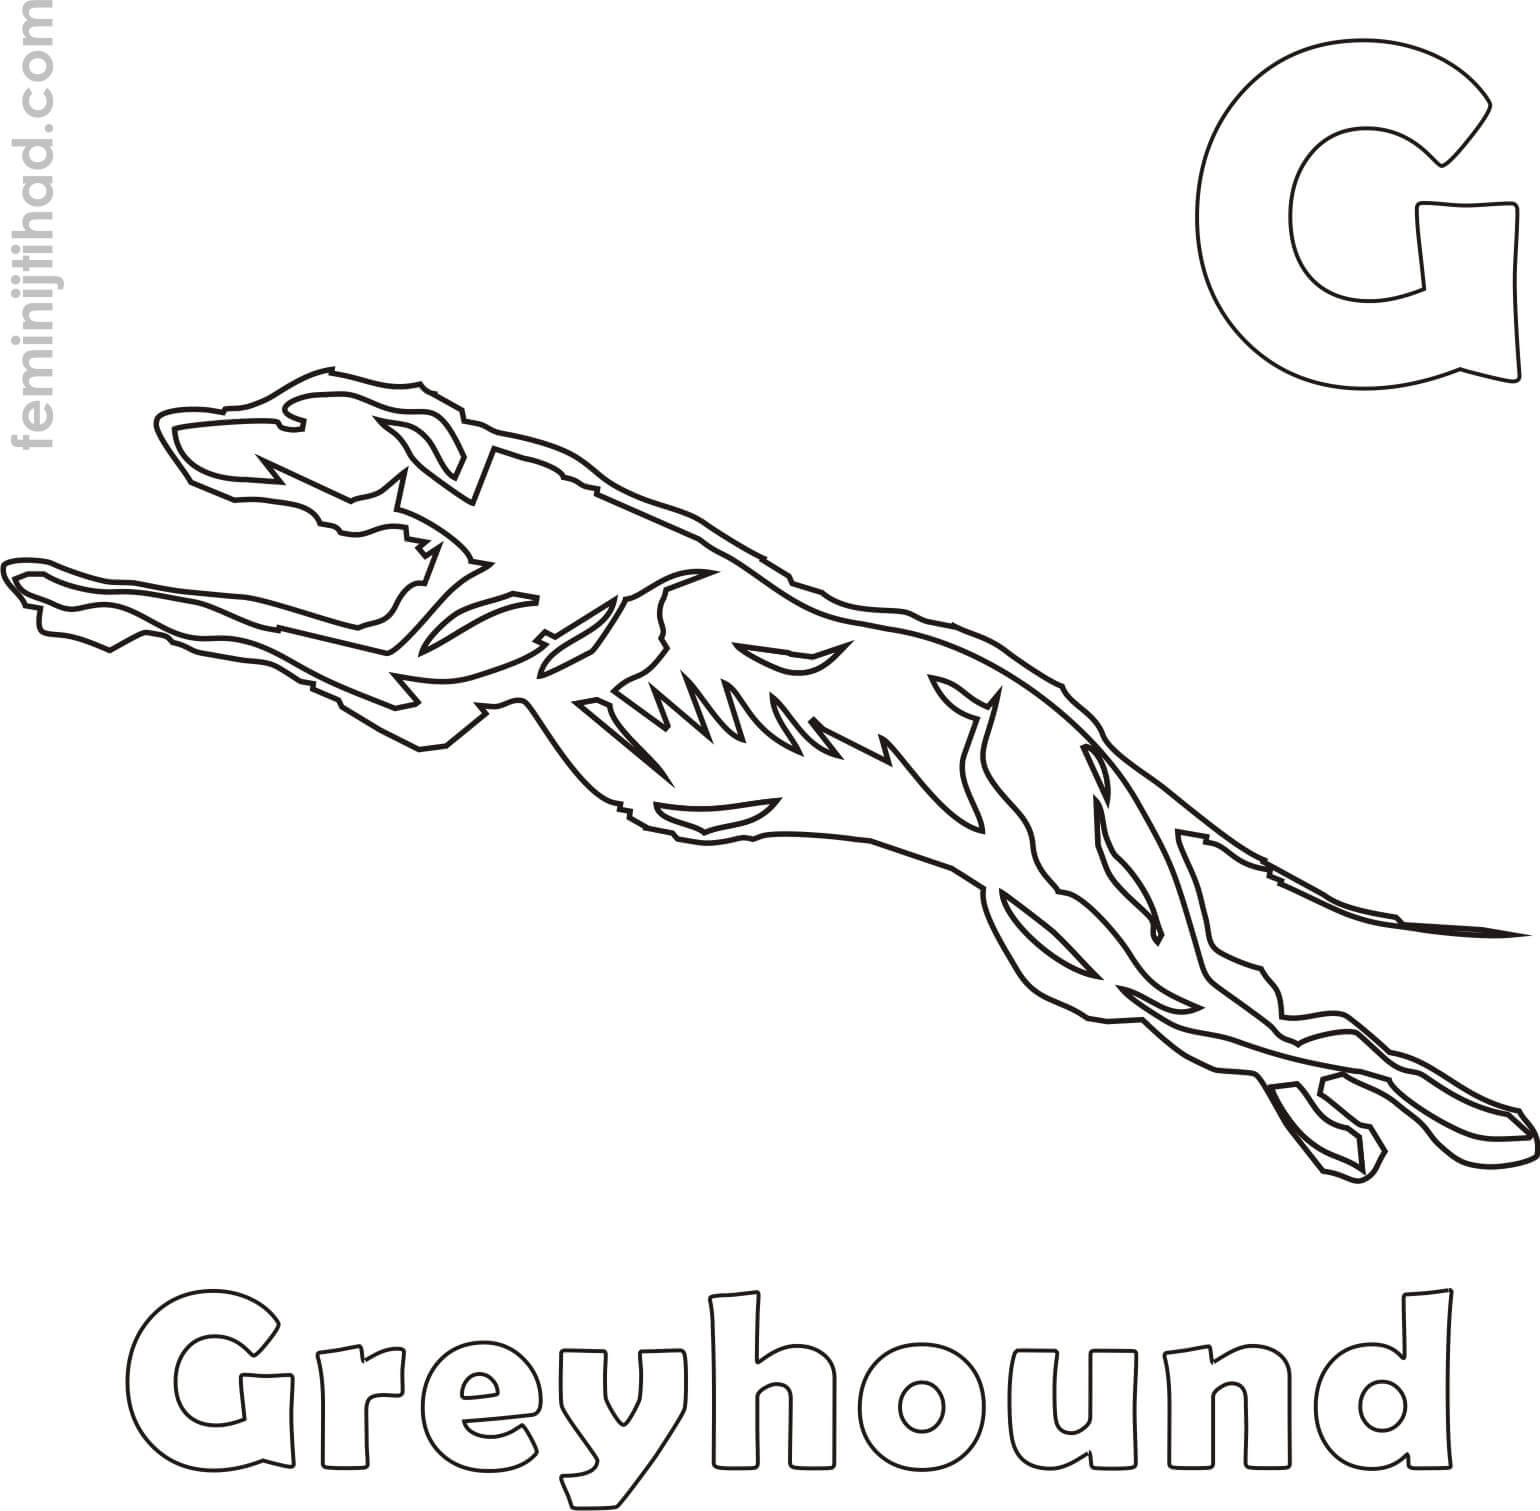 greyhound coloring page free printable